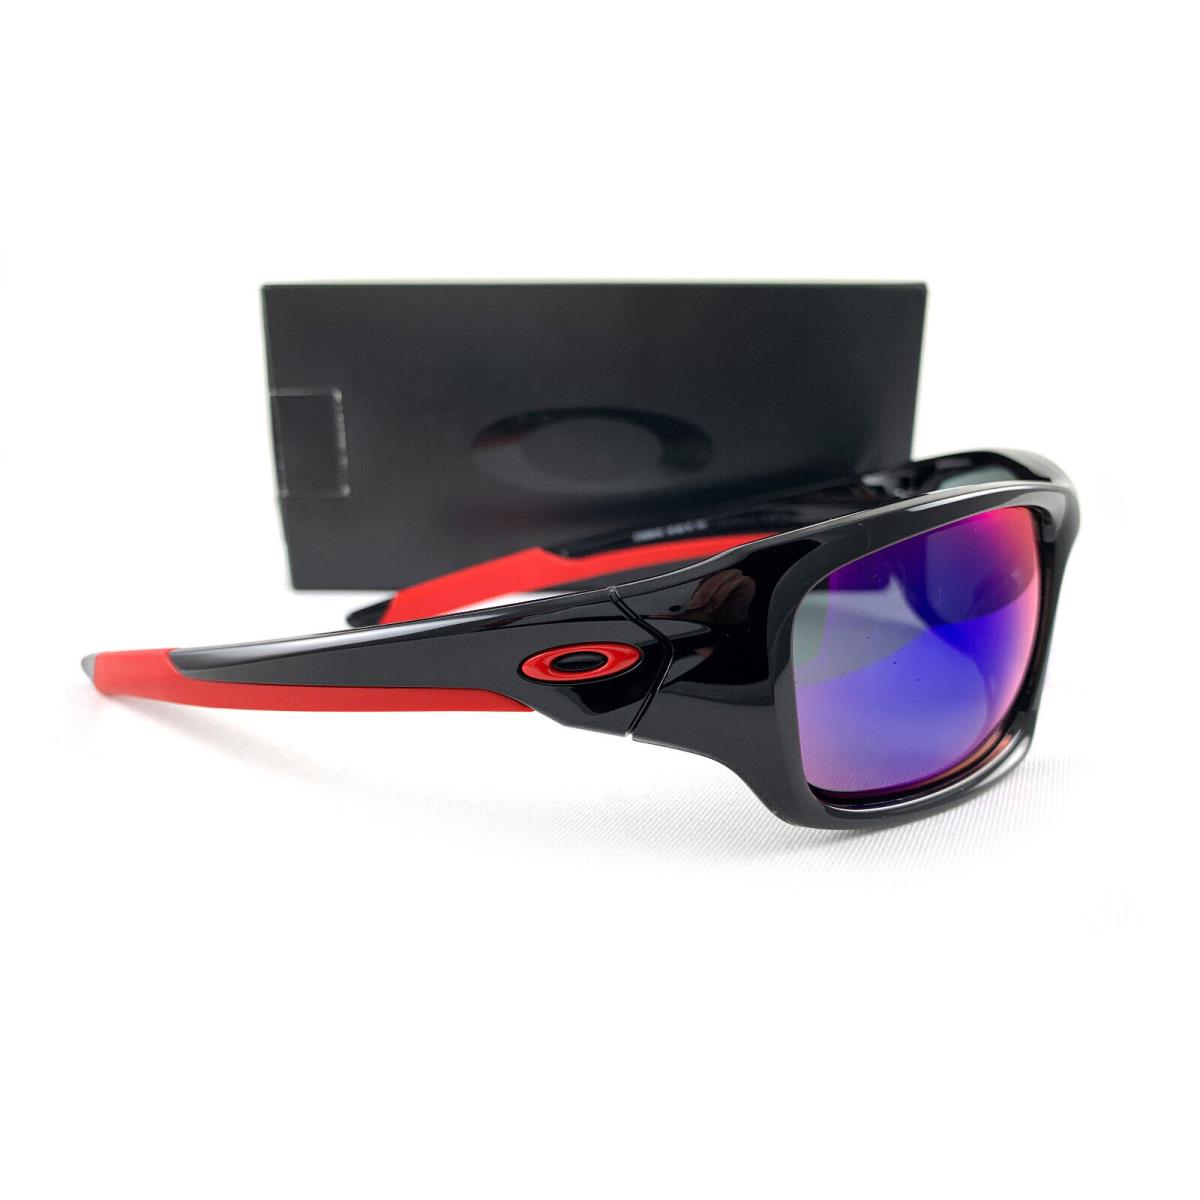 Oakley Sunglasses Valve OO9236-02 Black Positive Red Iridium - Black Frame, Positive Red Iridium Lens